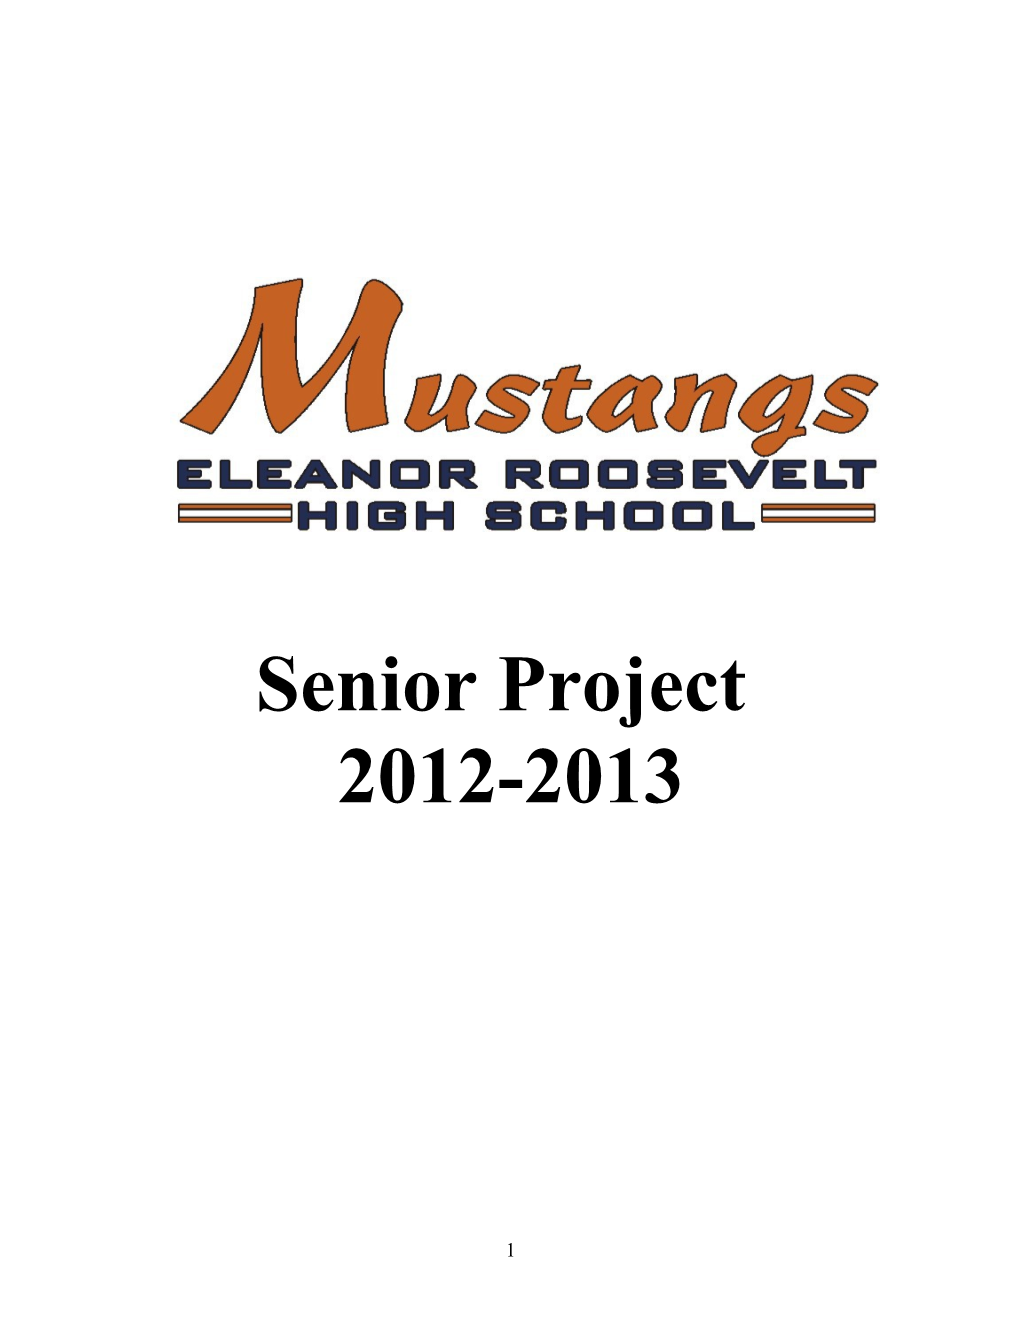 Senior Project: Career Exploration